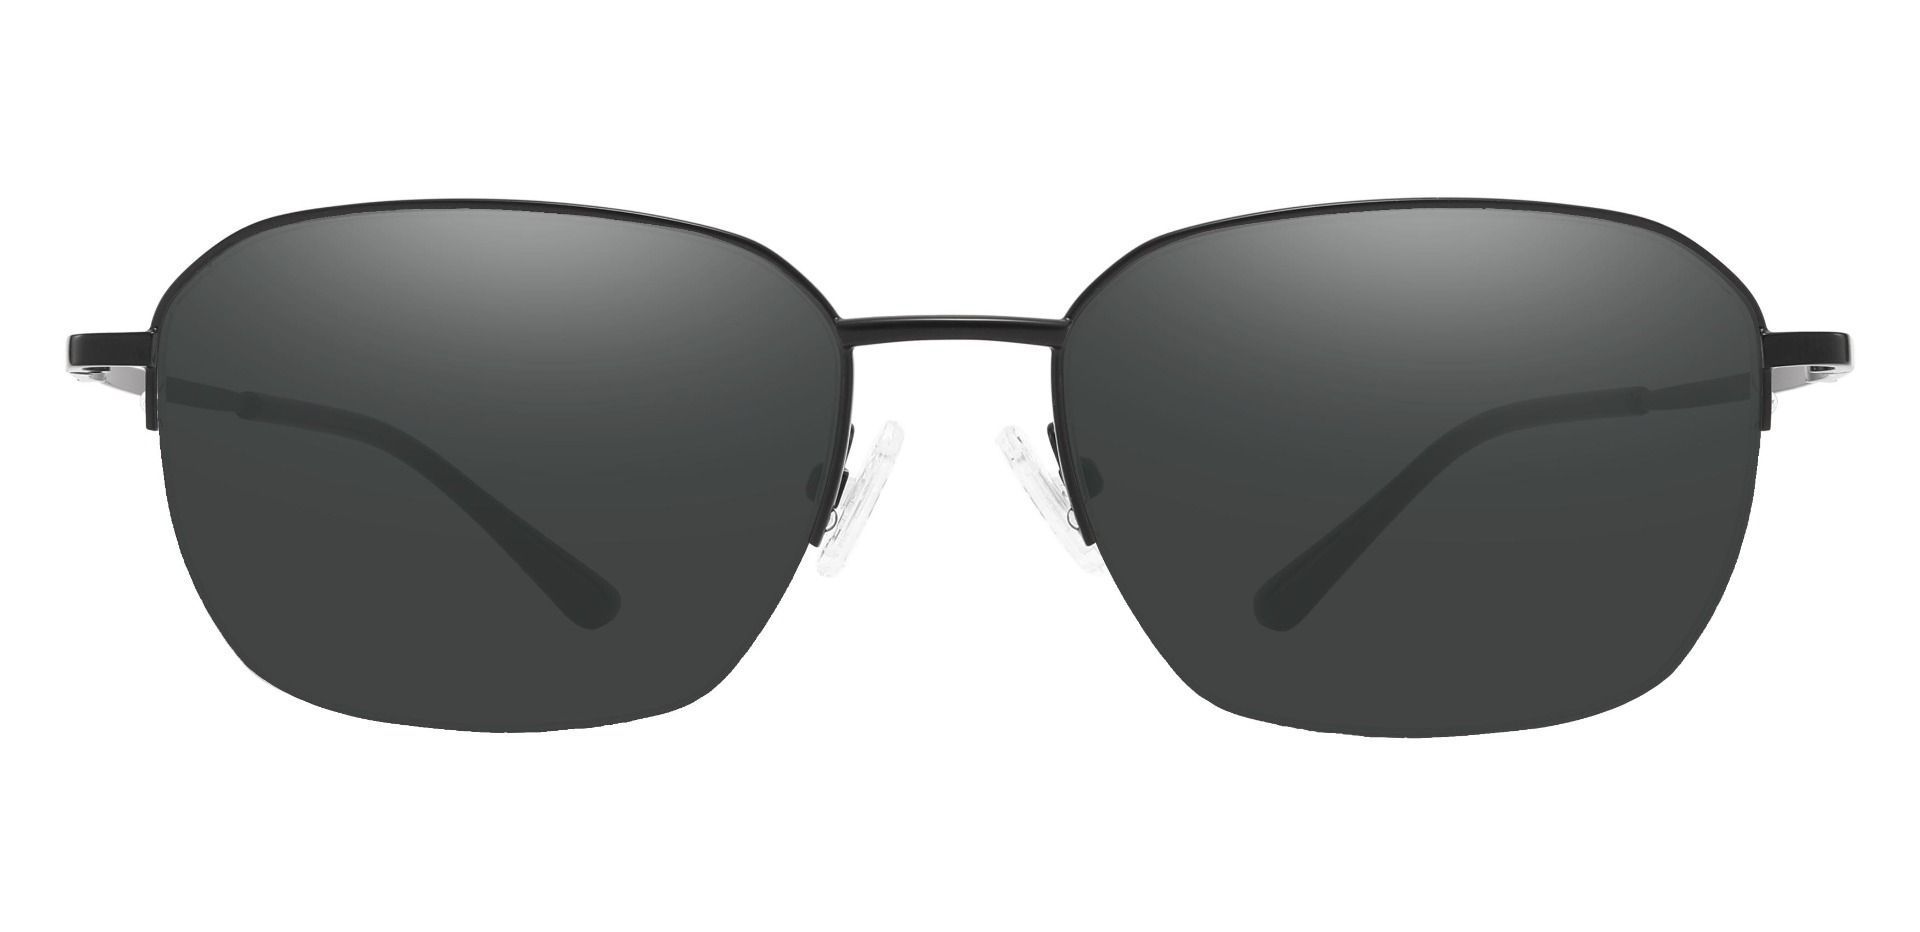 Wilton Geometric Progressive Sunglasses - Black Frame With Gray Lenses